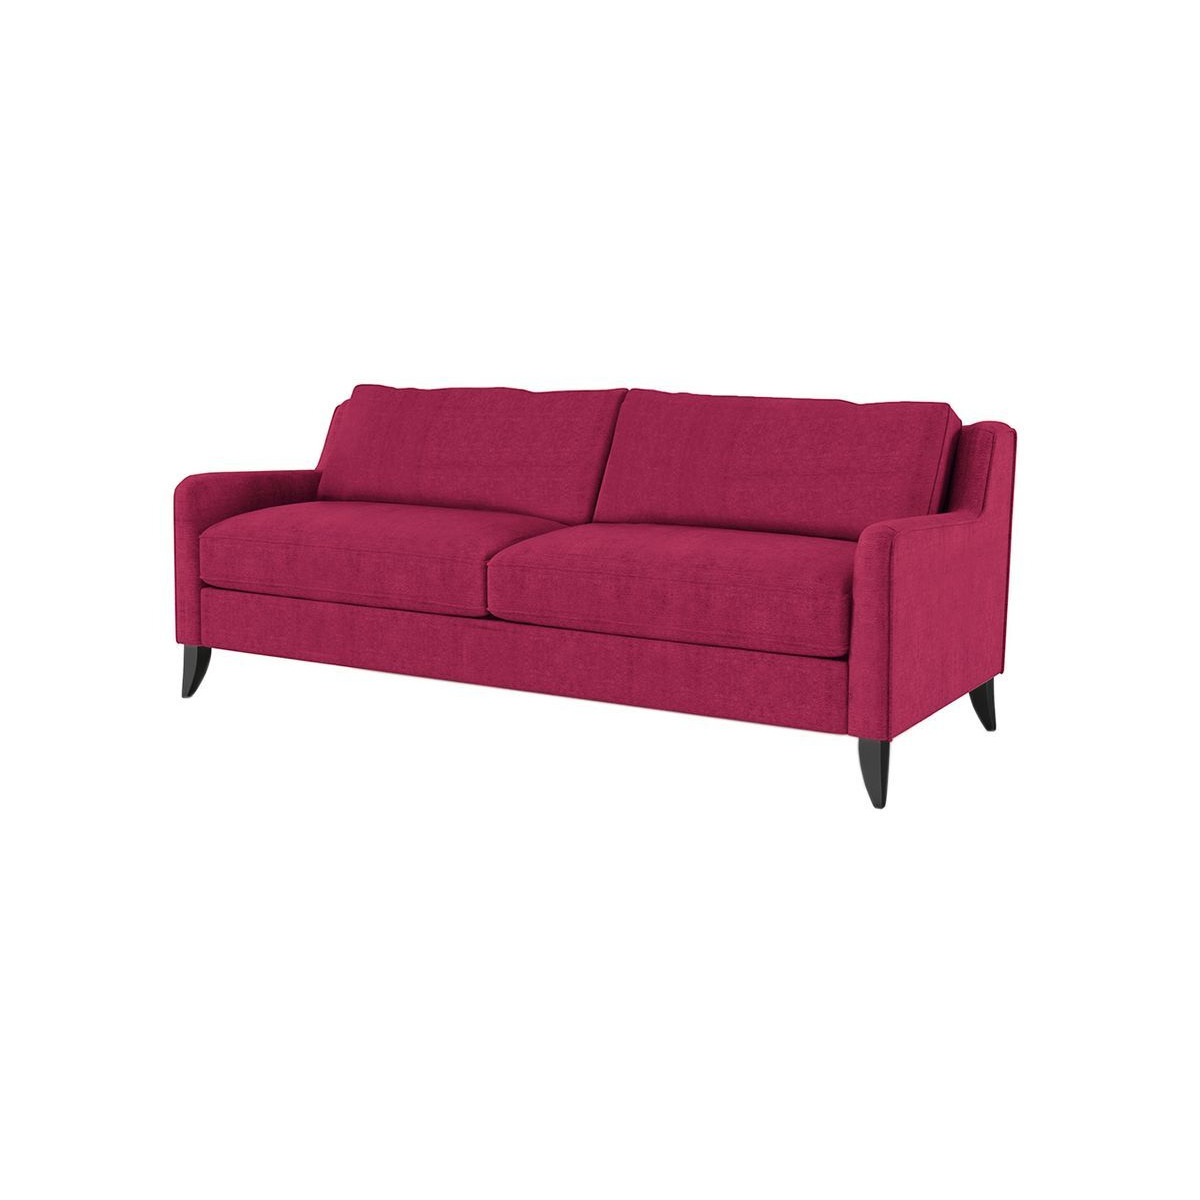 Orson 3 Seater Sofa, dark pink